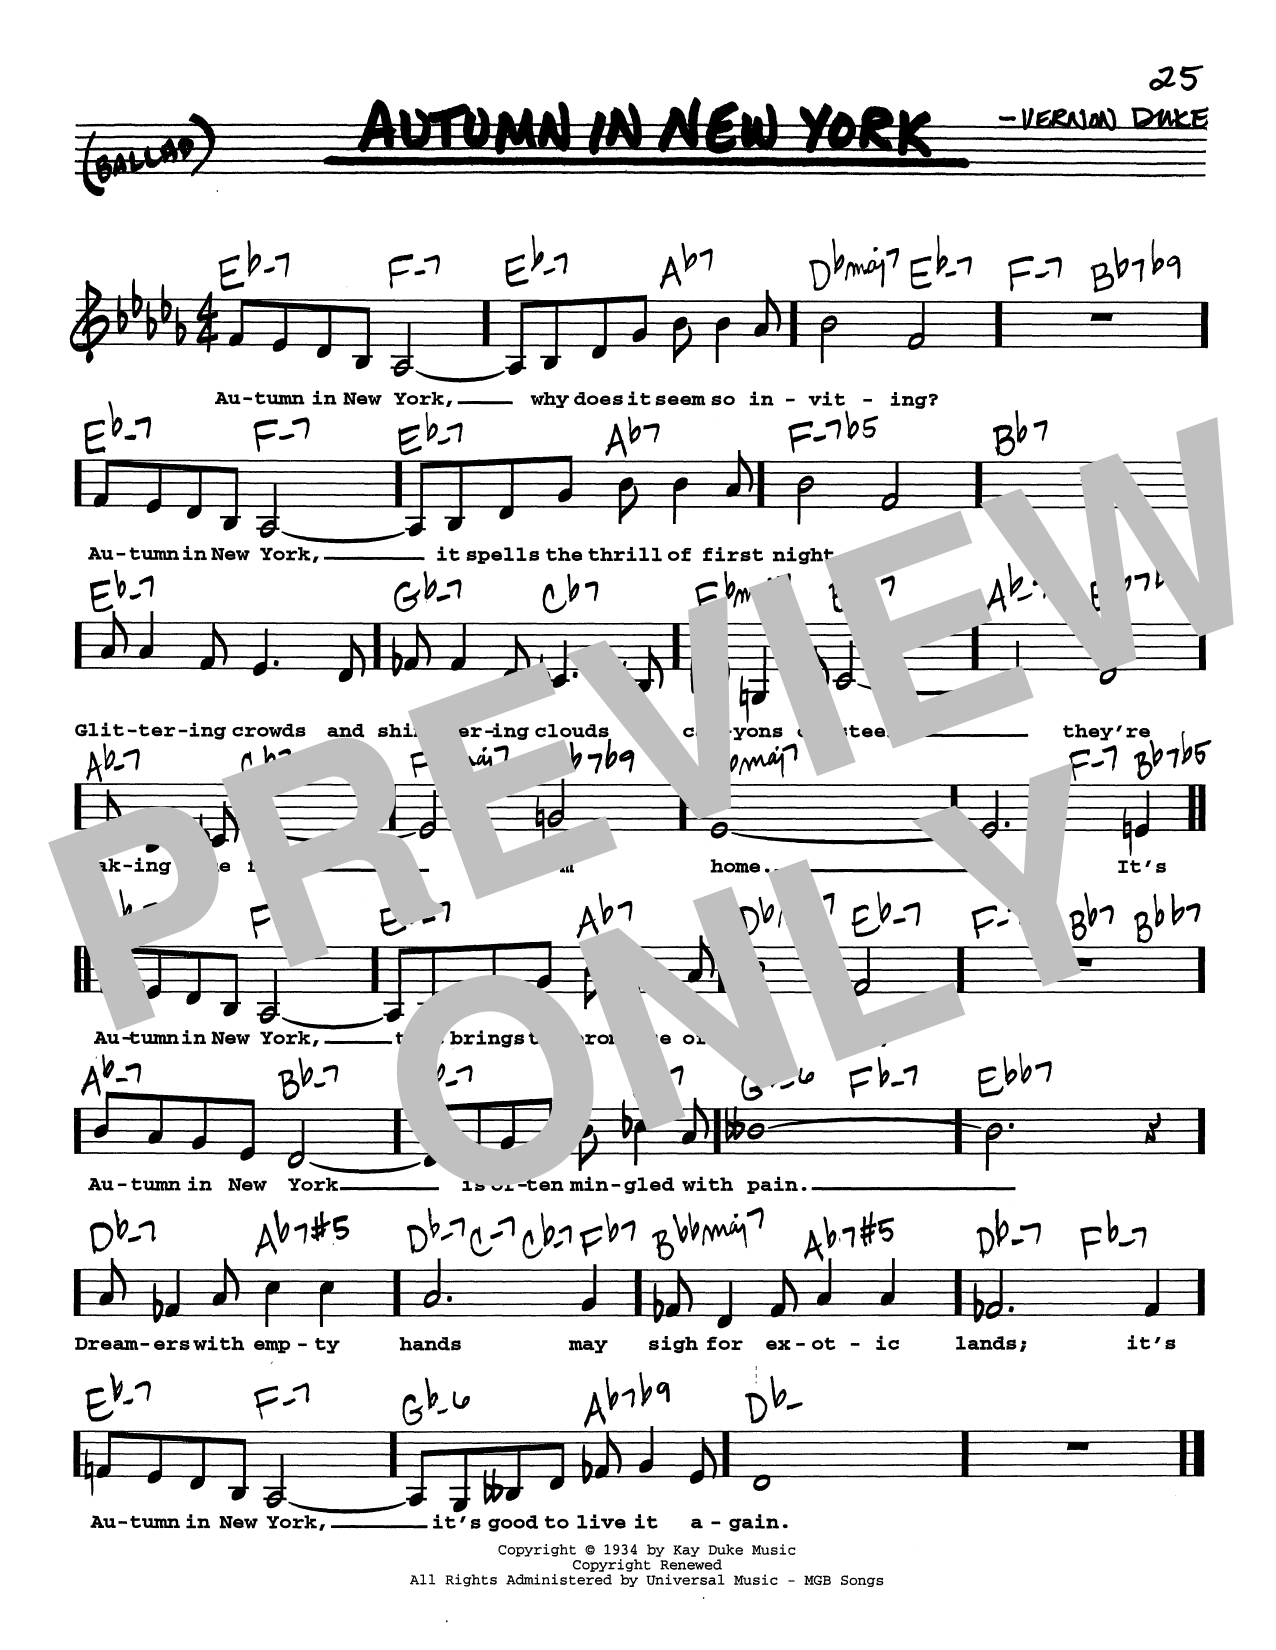 Vernon Duke Autumn In New York (Low Voice) sheet music notes printable PDF score